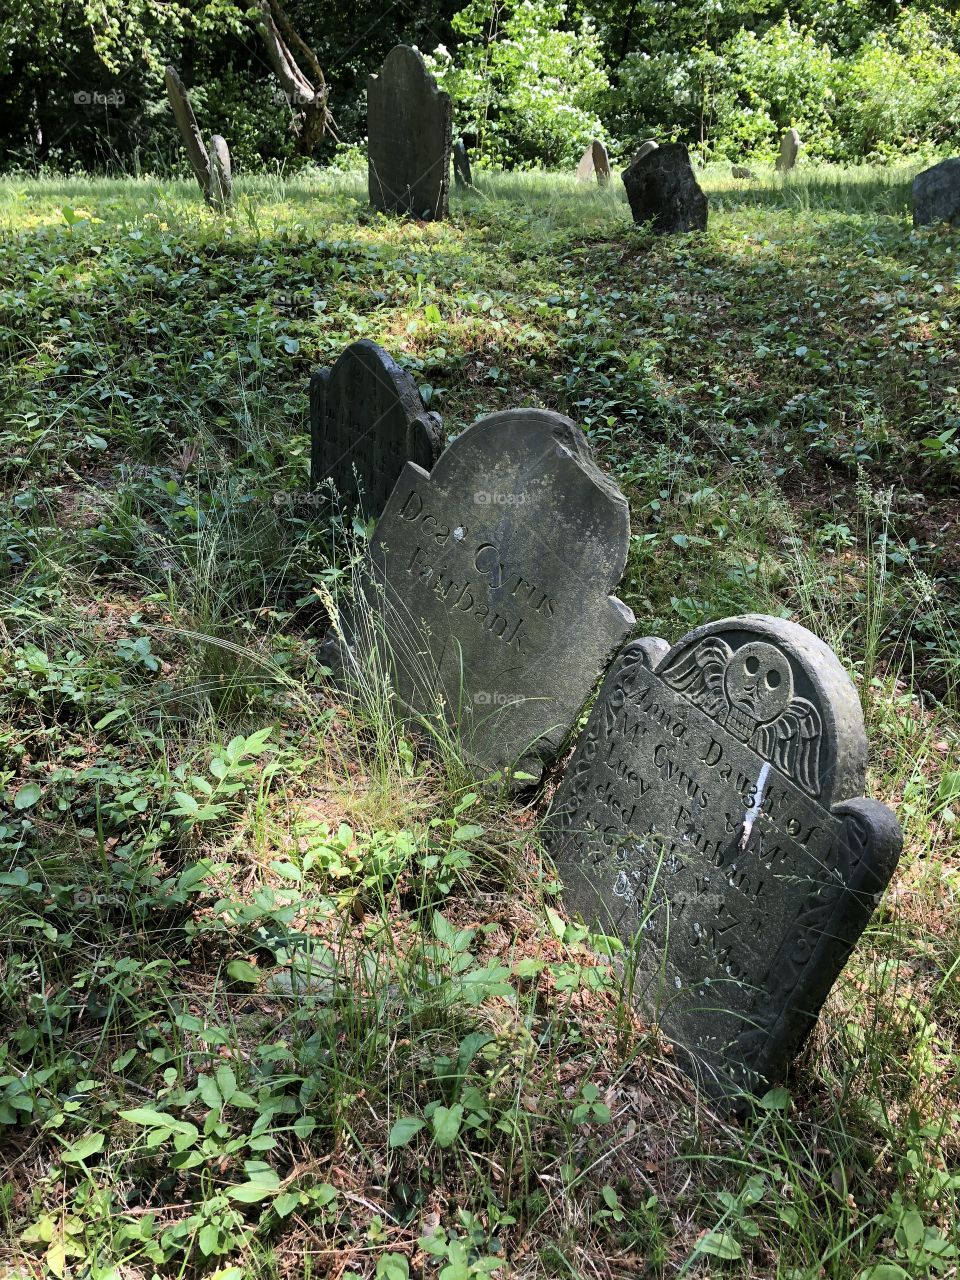 Old grave stones